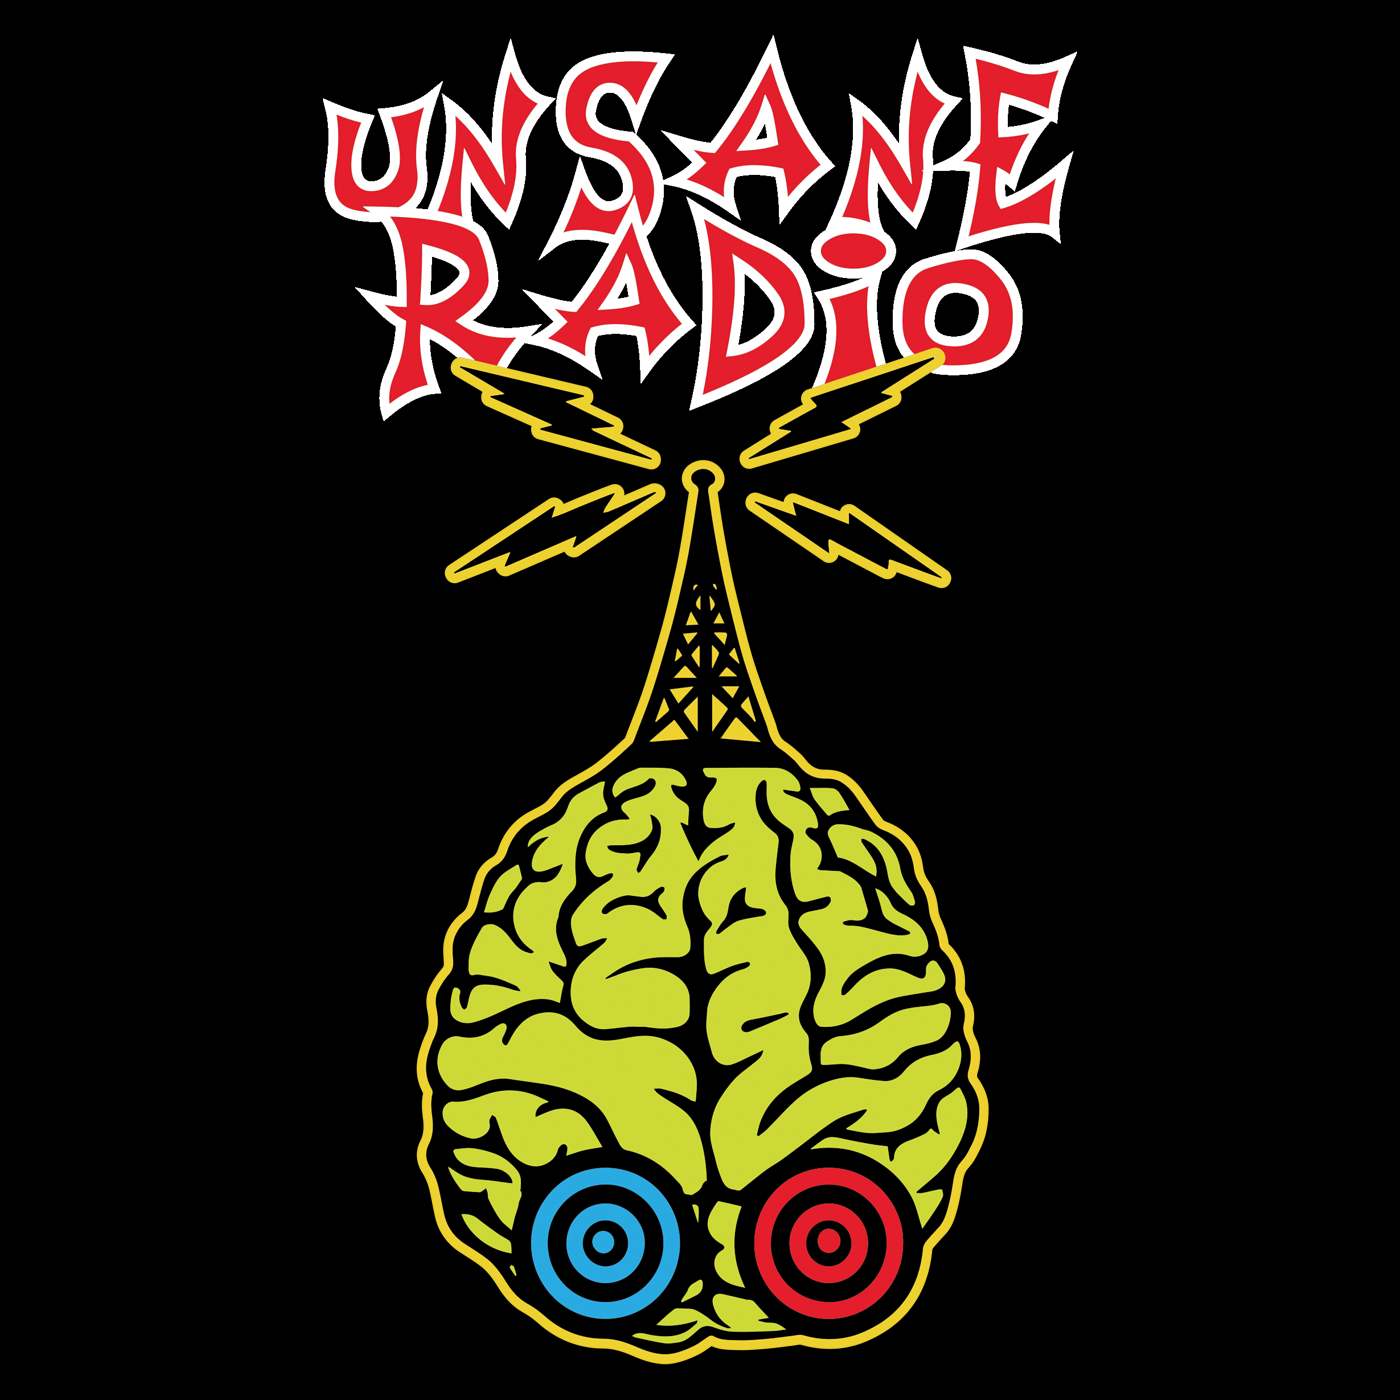 Unsane Radio